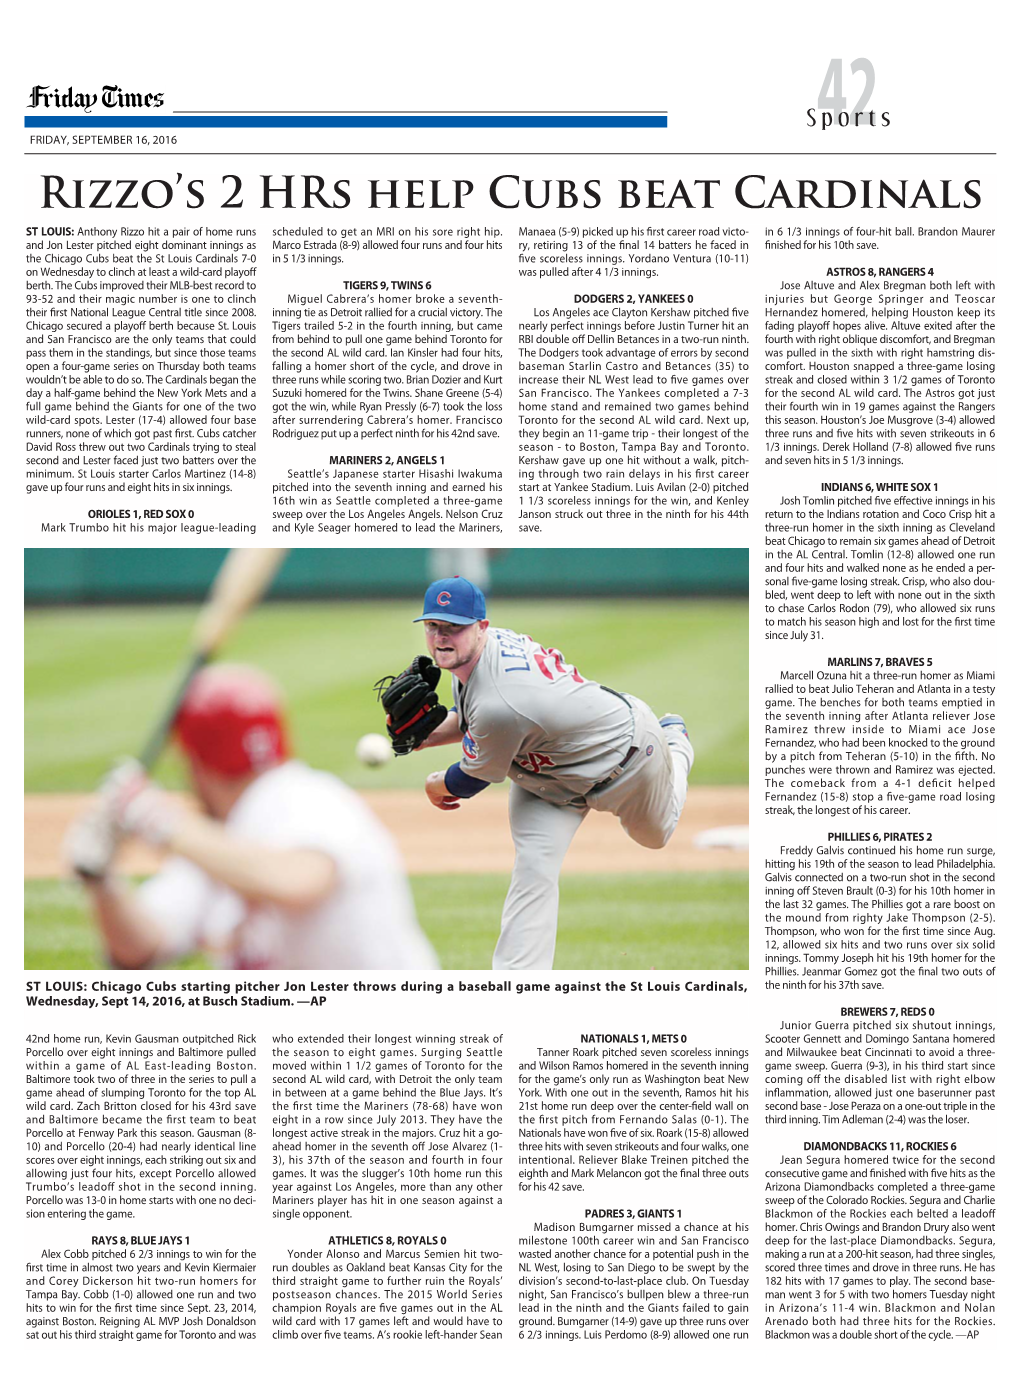 Rizzo's 2 Hrs Help Cubs Beat Cardinals